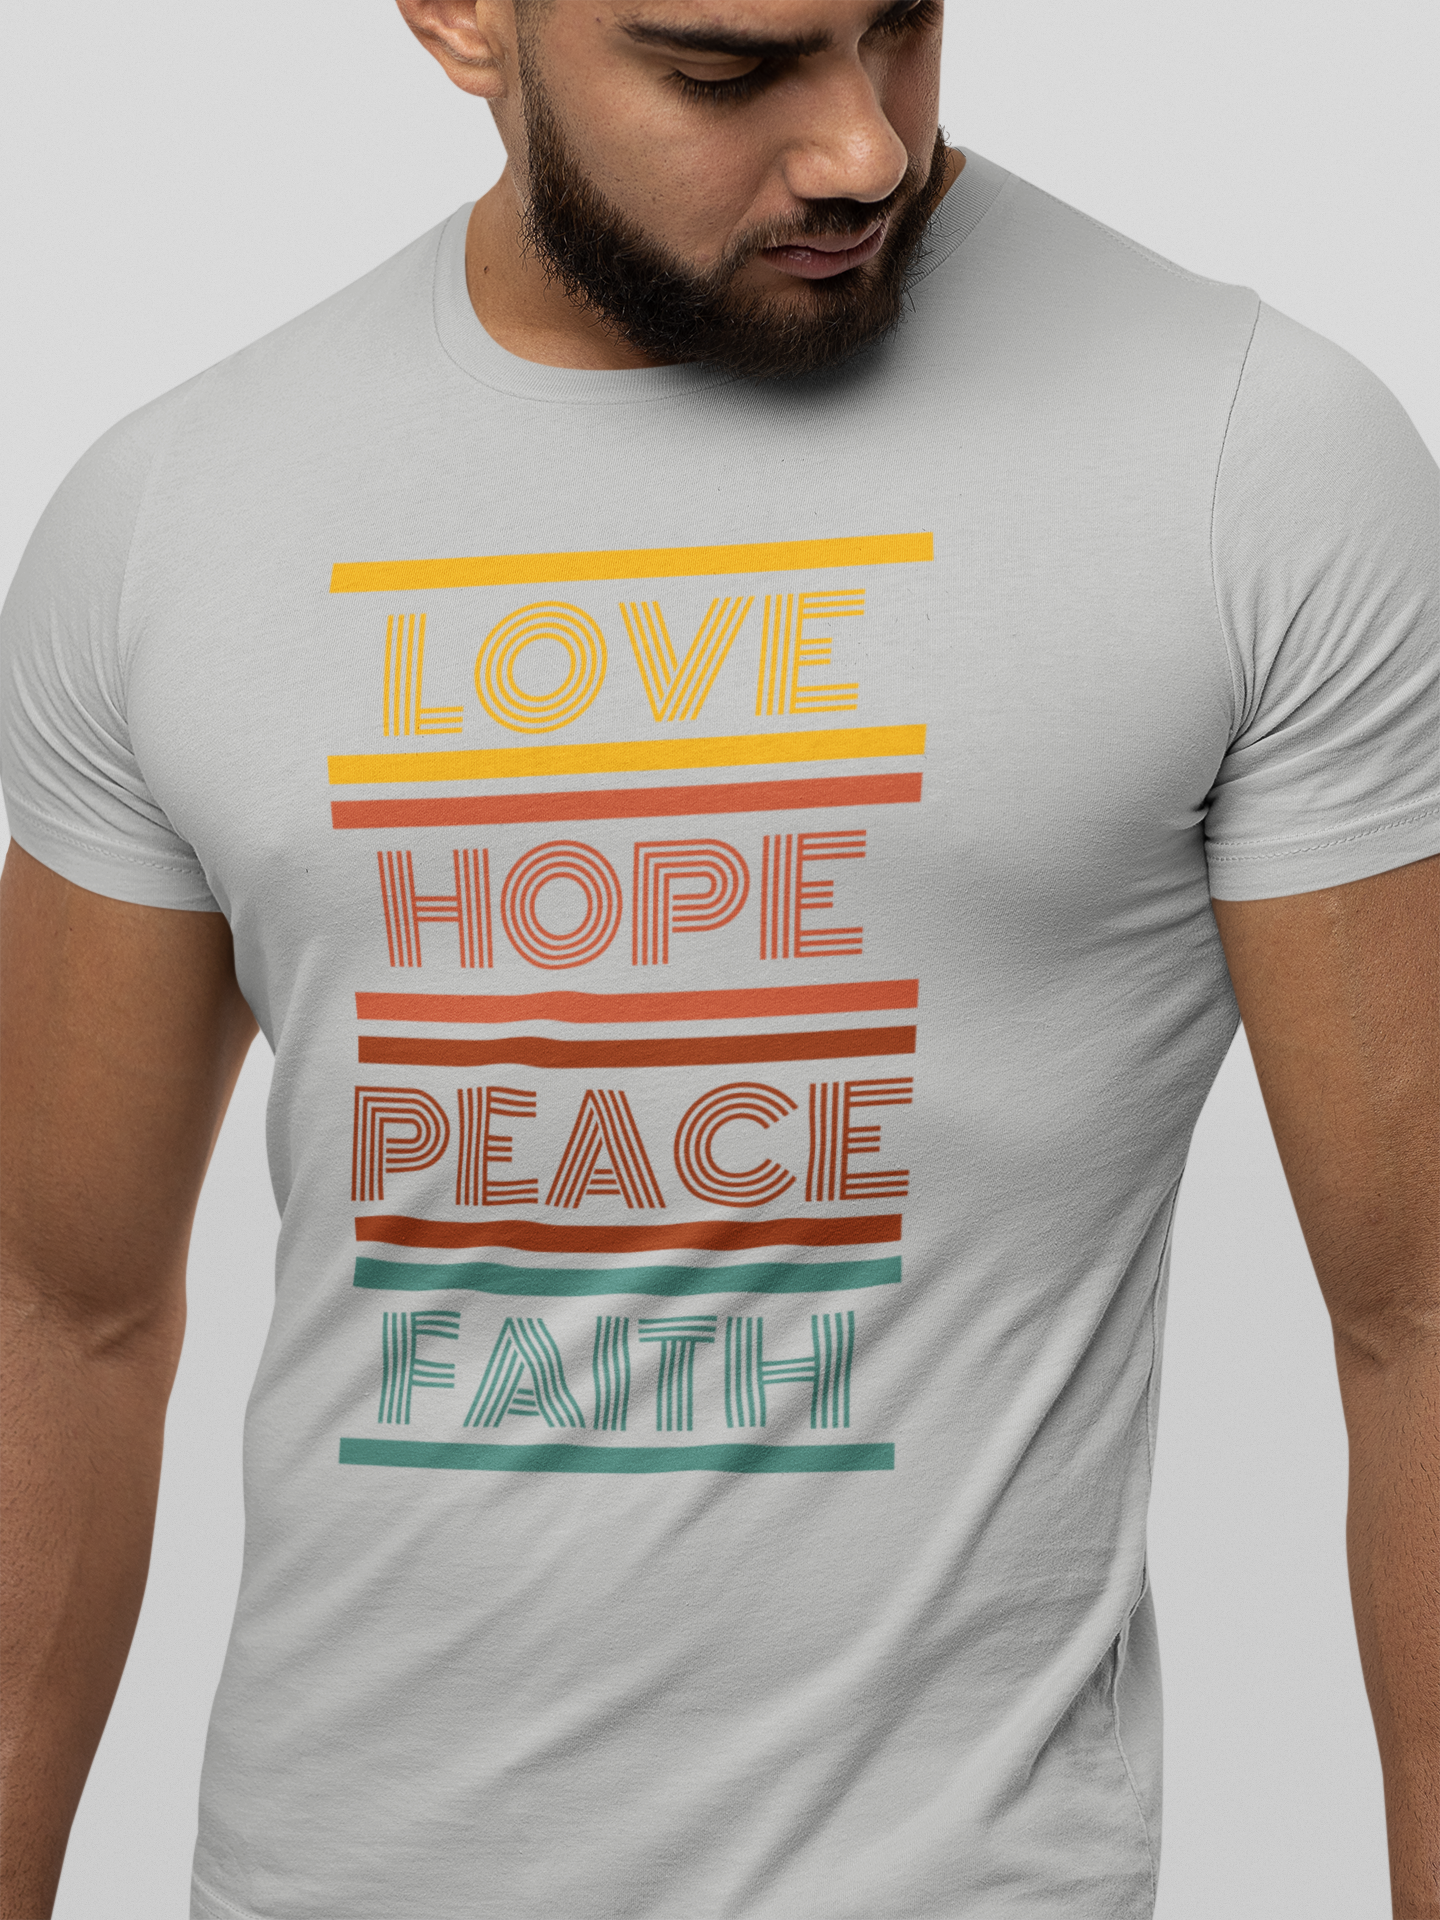 Love and Hope Motivational T-Shirt - Unisex - Motivational Treats